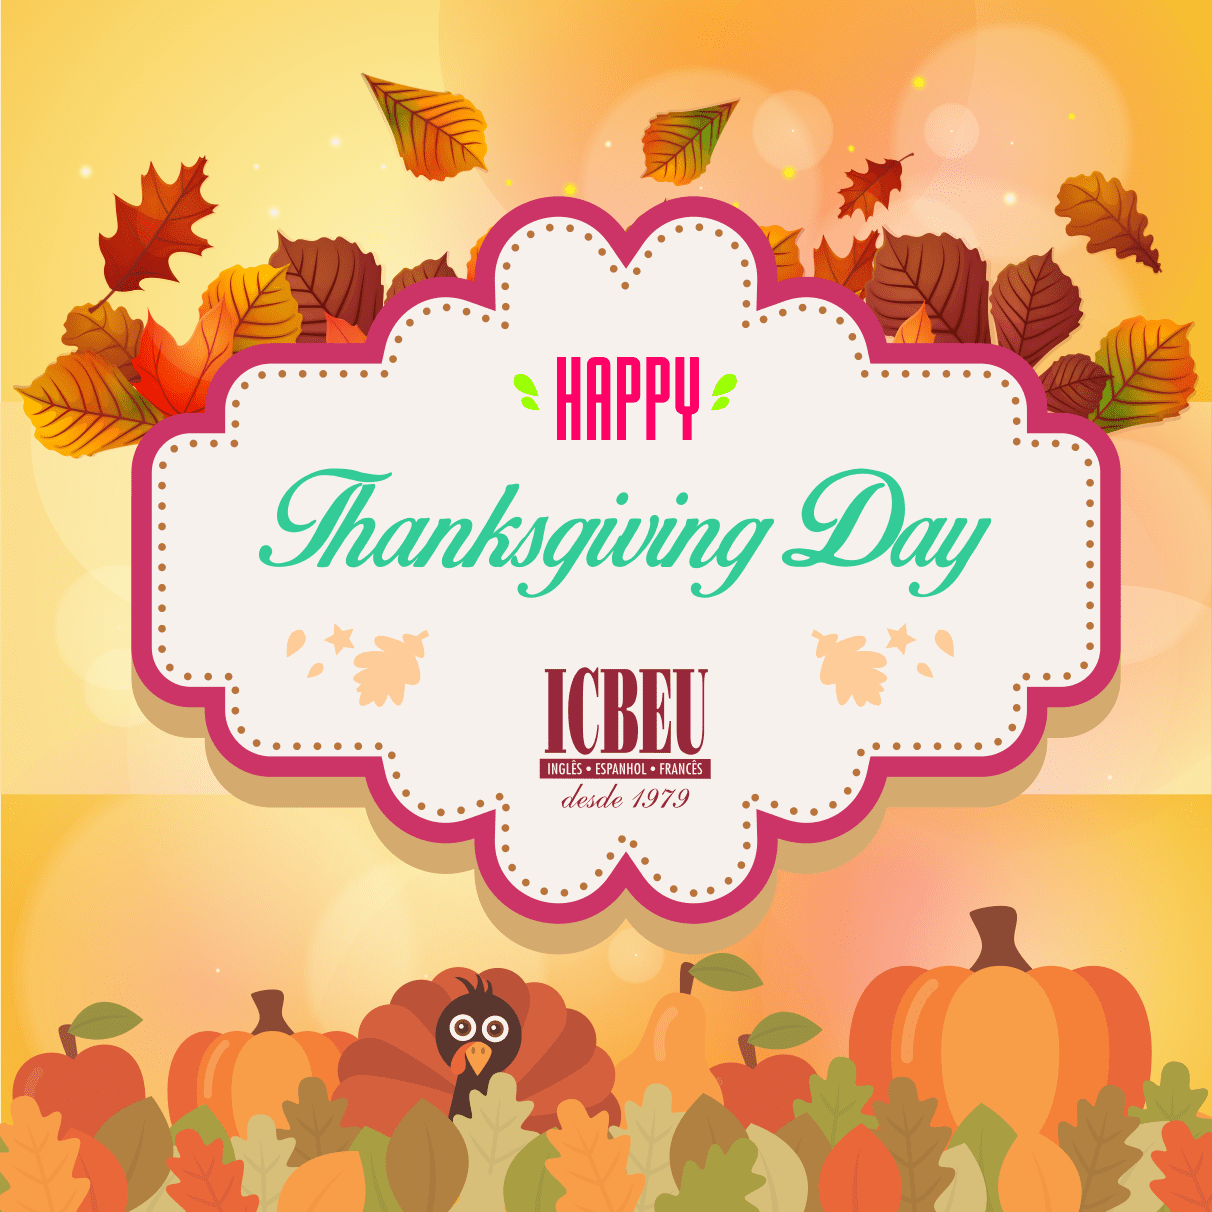 Happy Thanksgiving Day! - ICBEU